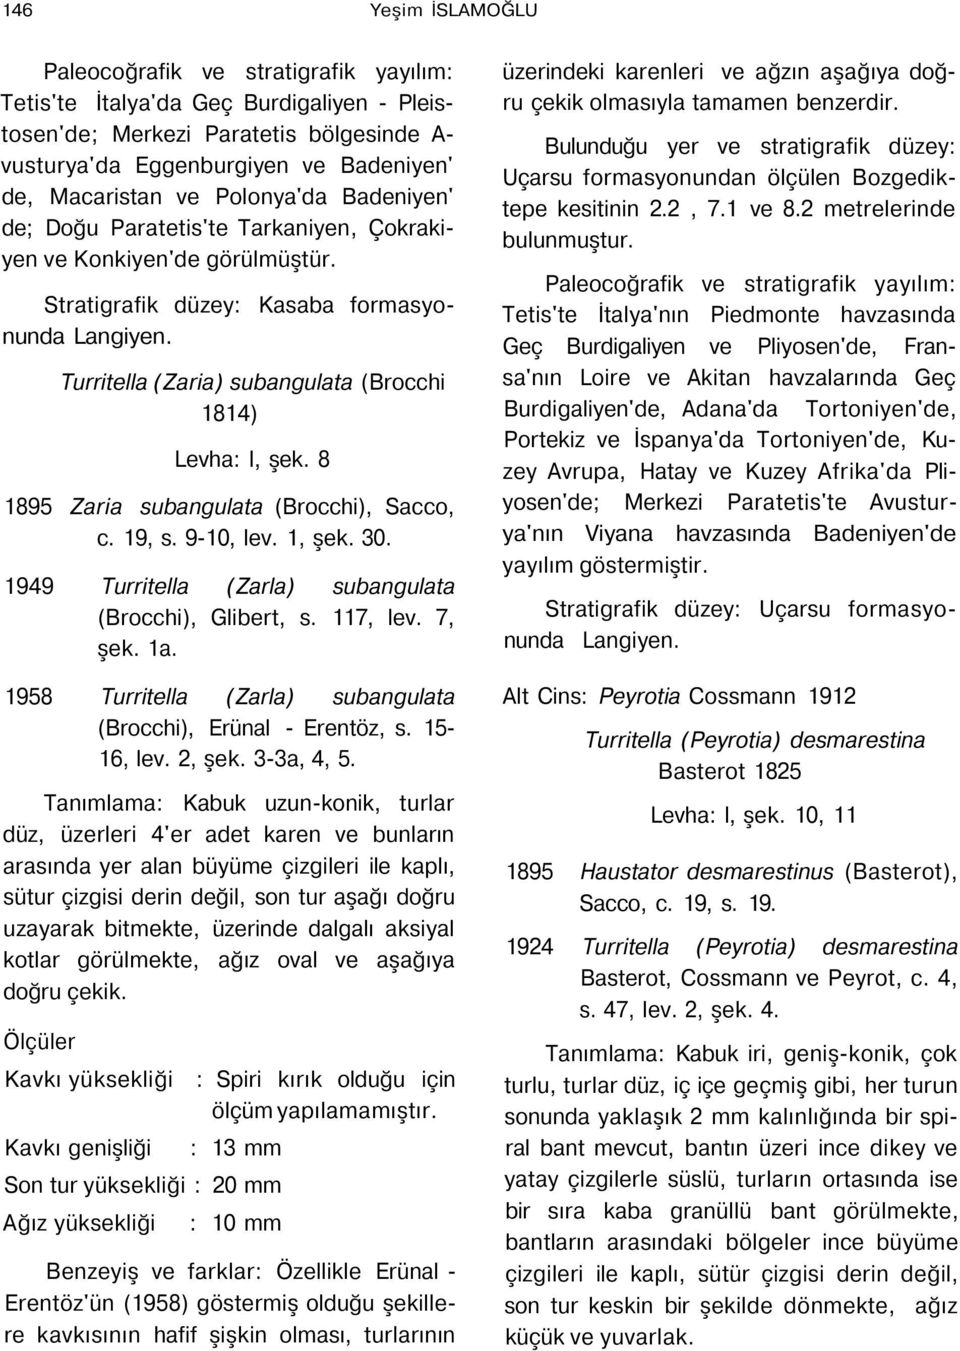 8 1895 Zaria subangulata (Brocchi), Sacco, c. 19, s. 9-10, lev. 1, şek. 30. 1949 Turritella (Zarla) subangulata (Brocchi), Glibert, s. 117, lev. 7, şek. 1a.